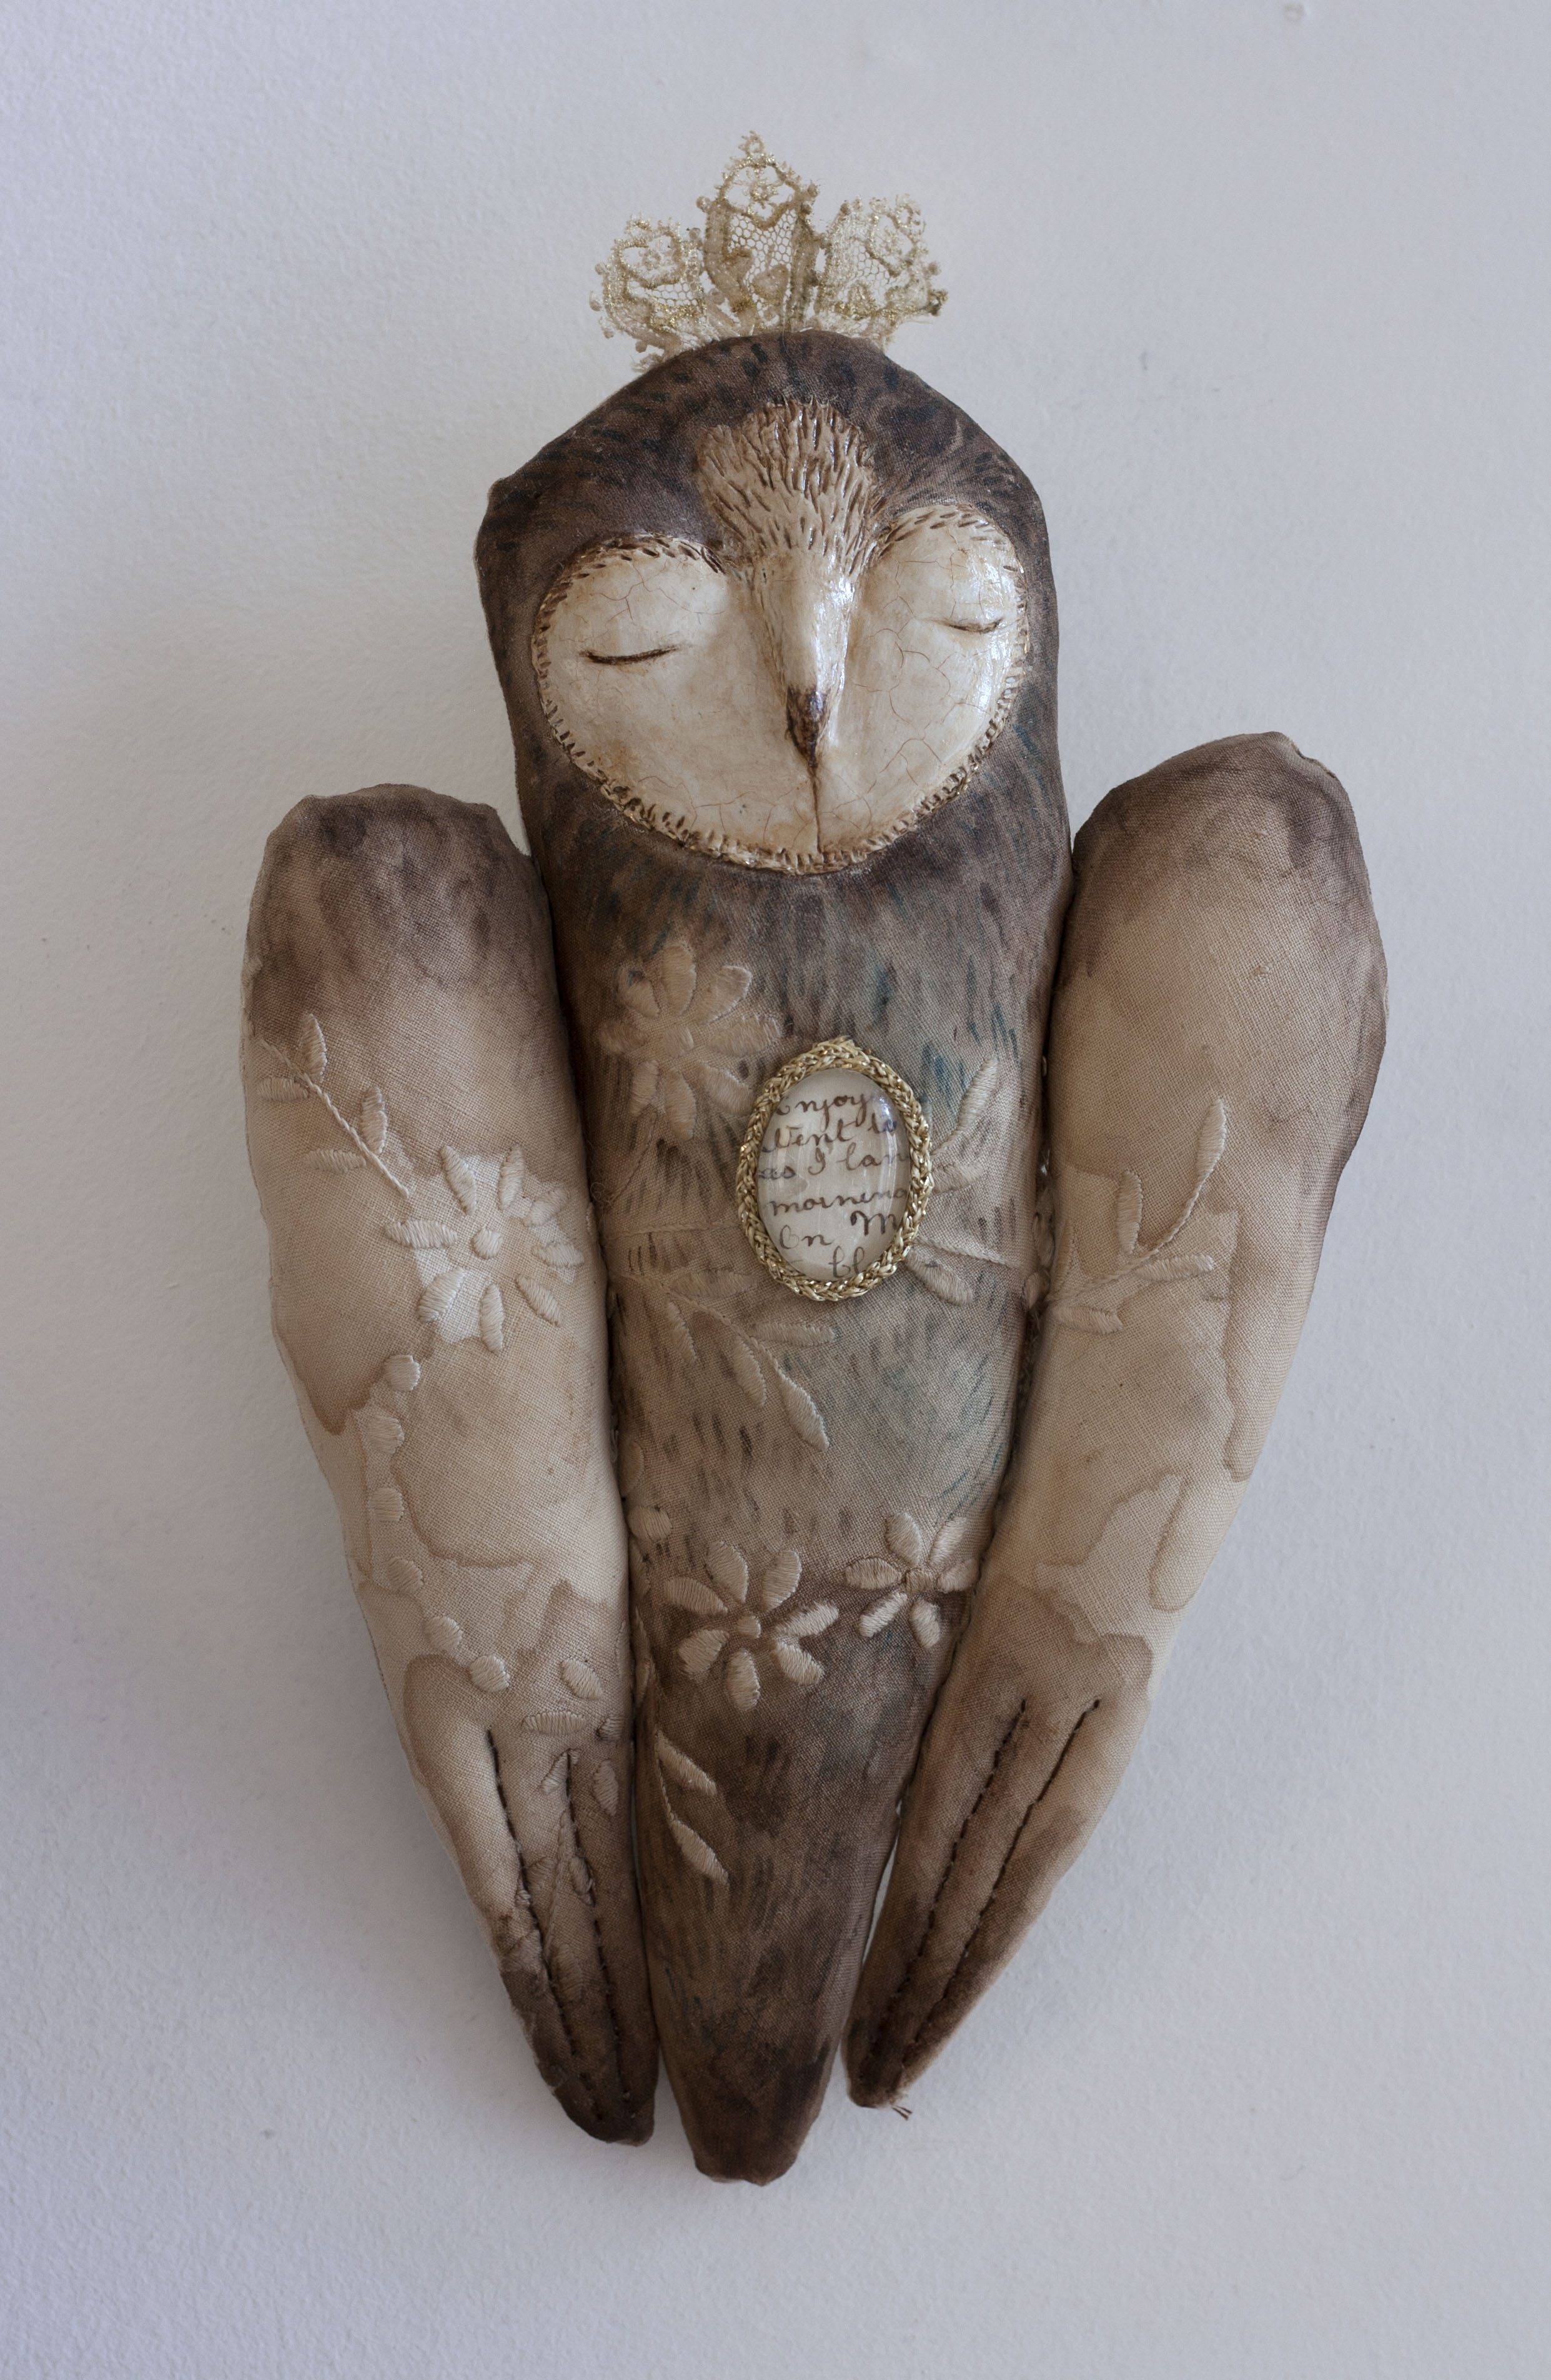 Owl Messenger